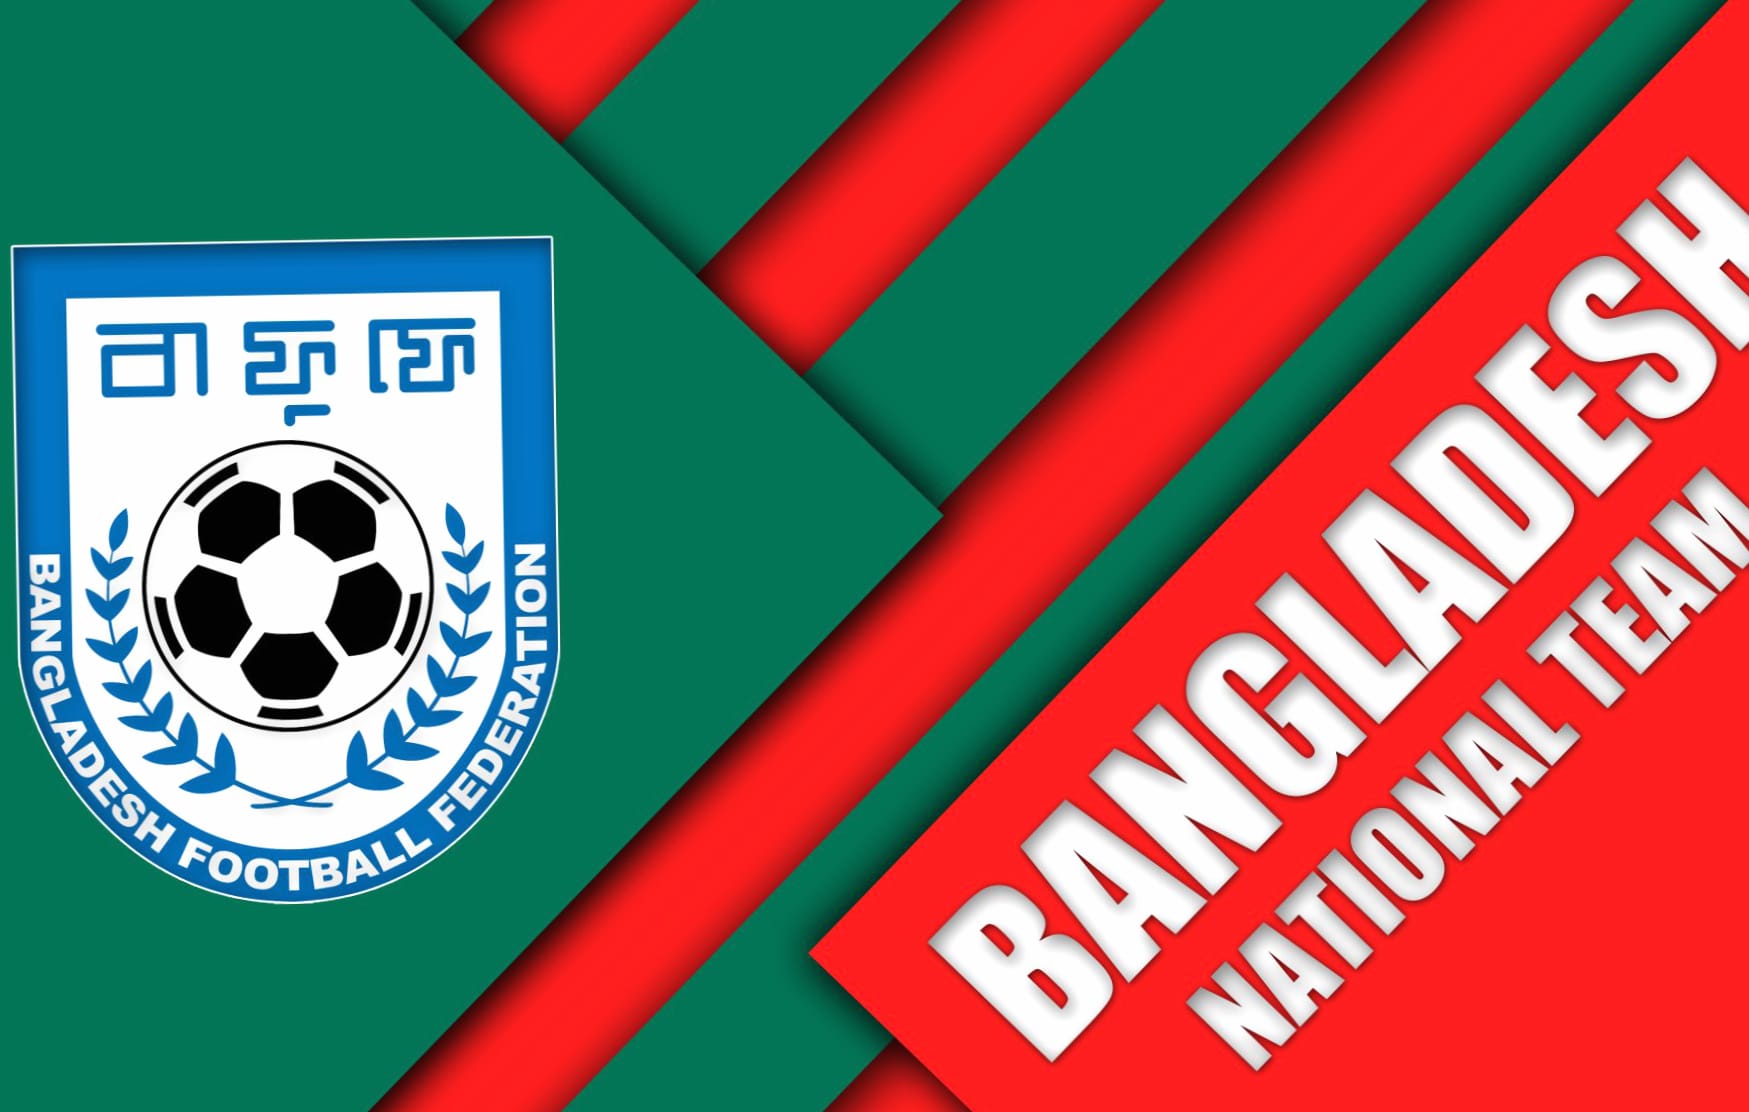 Bangladesh National Football Team at 1600 x 1200 size wallpapers HD quality